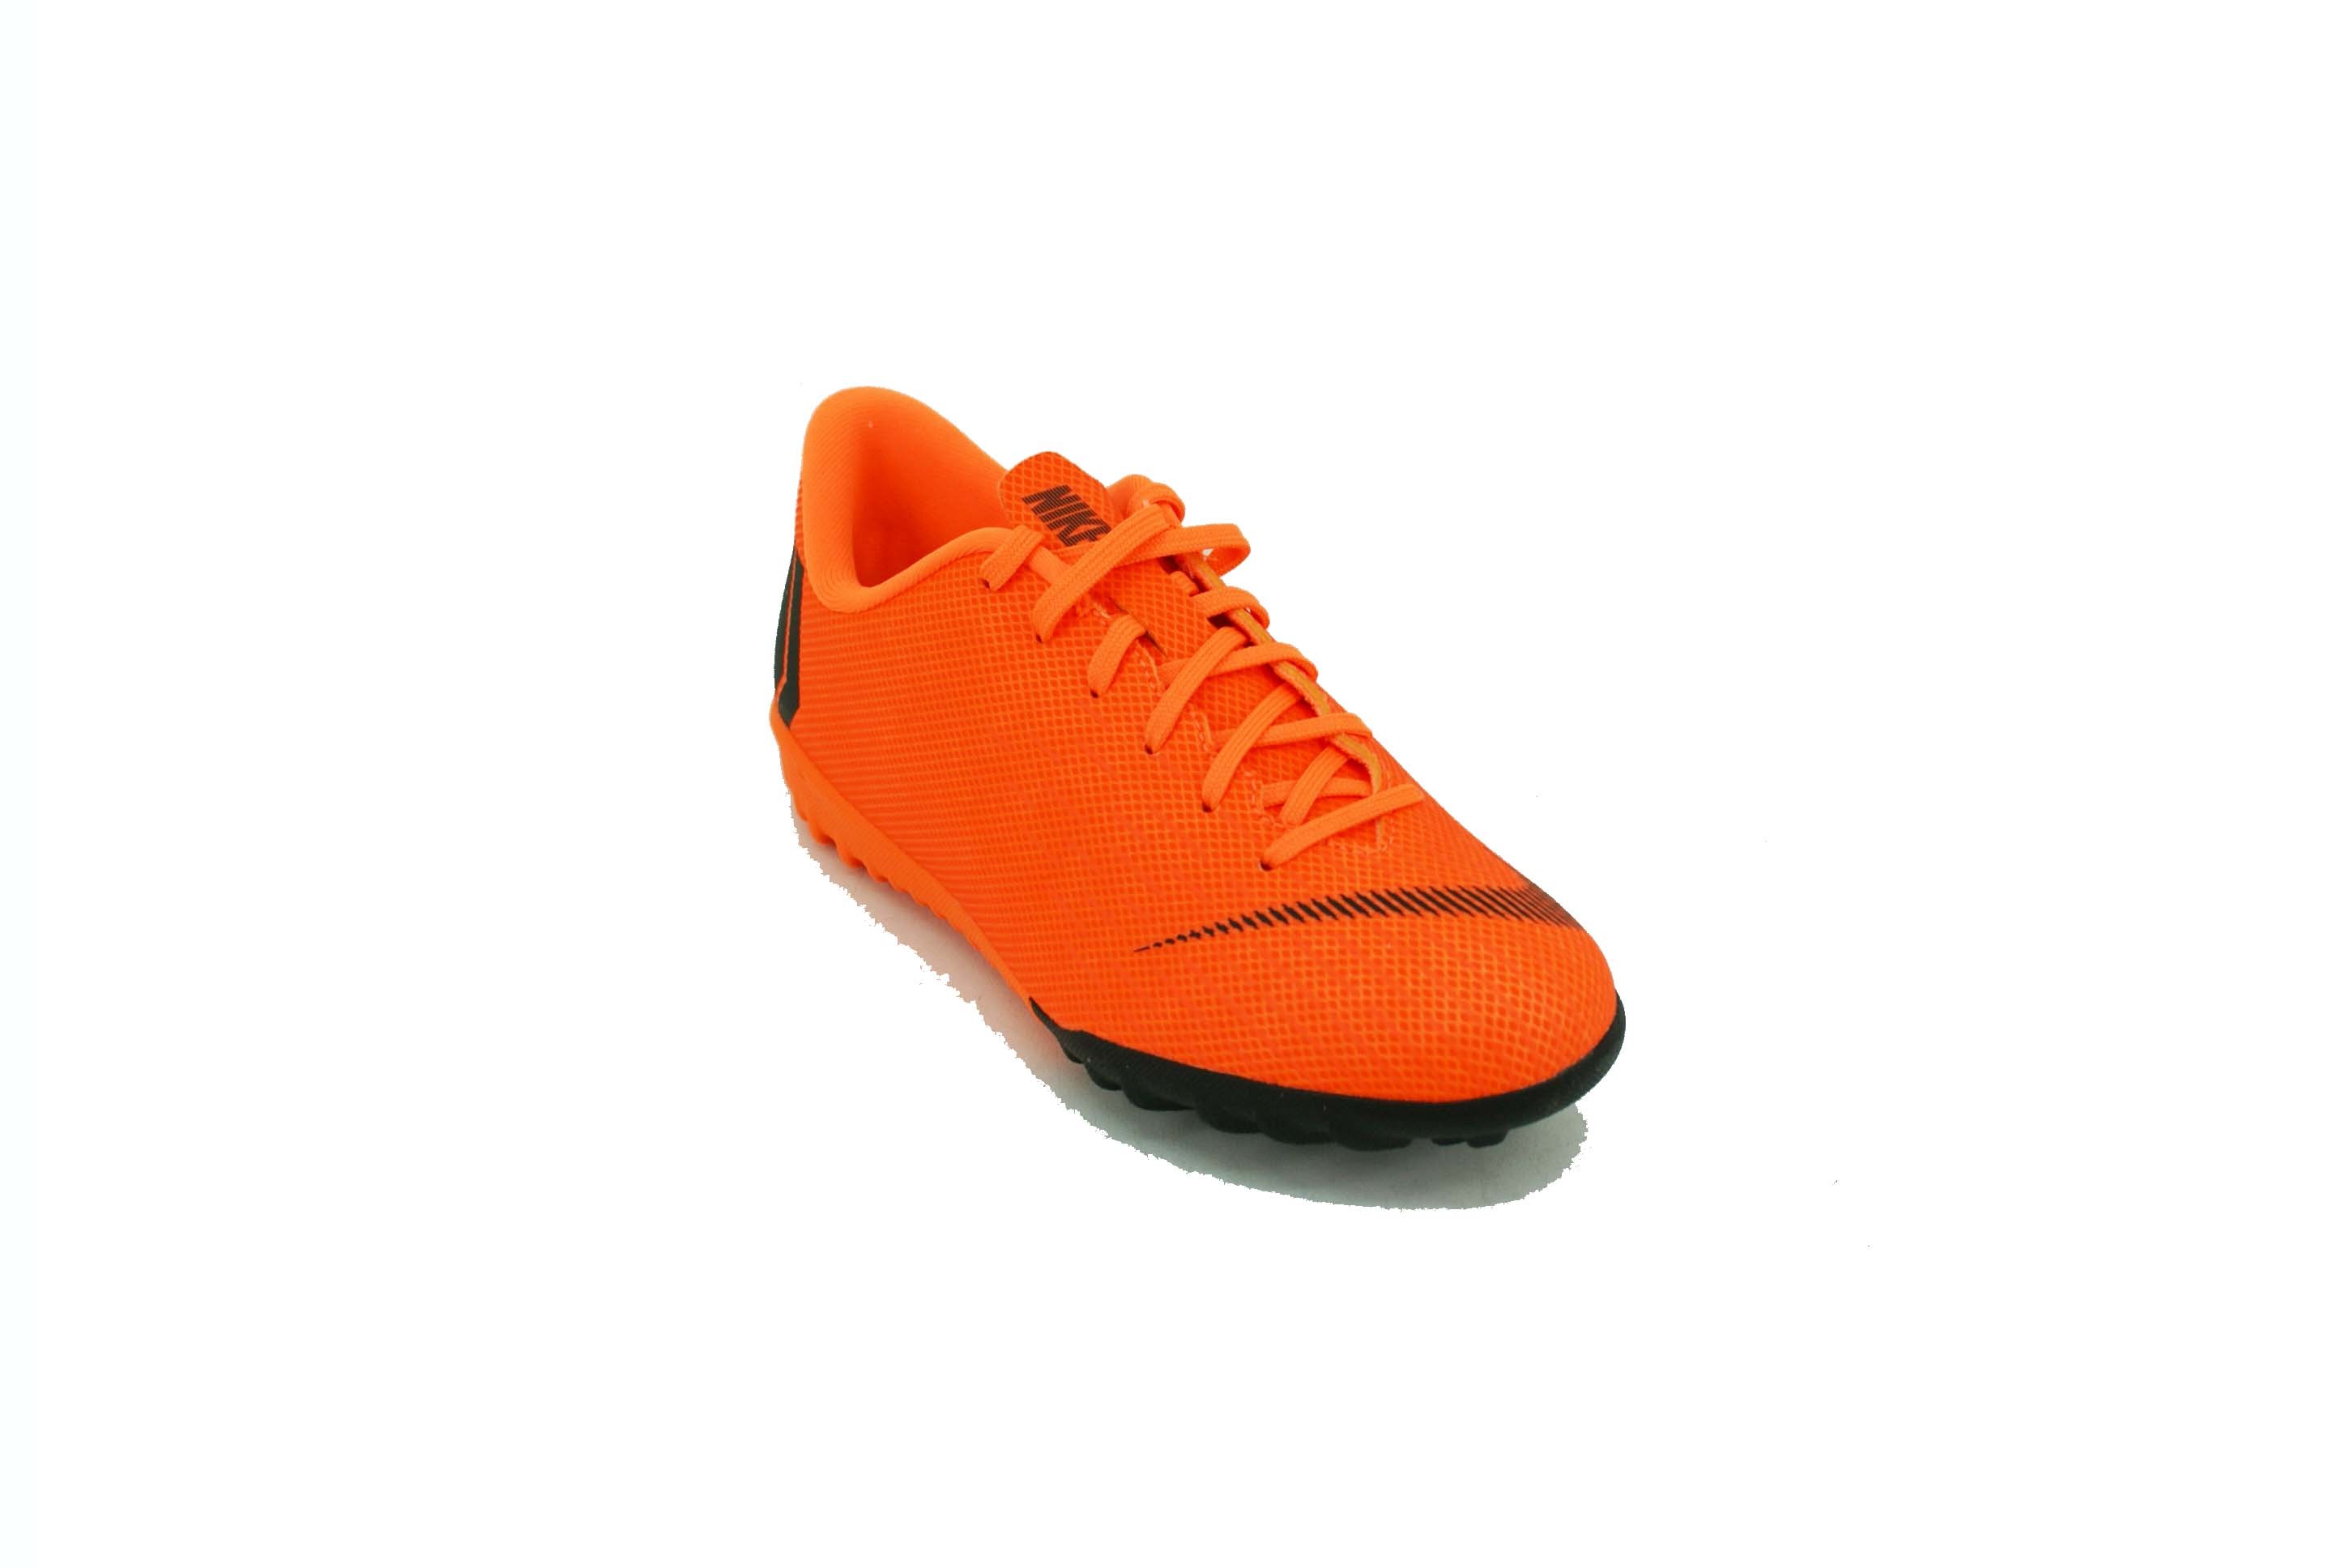 Descomponer pompa testimonio Botines Nike Naranja Top Sellers, 45% OFF | eaob.eu